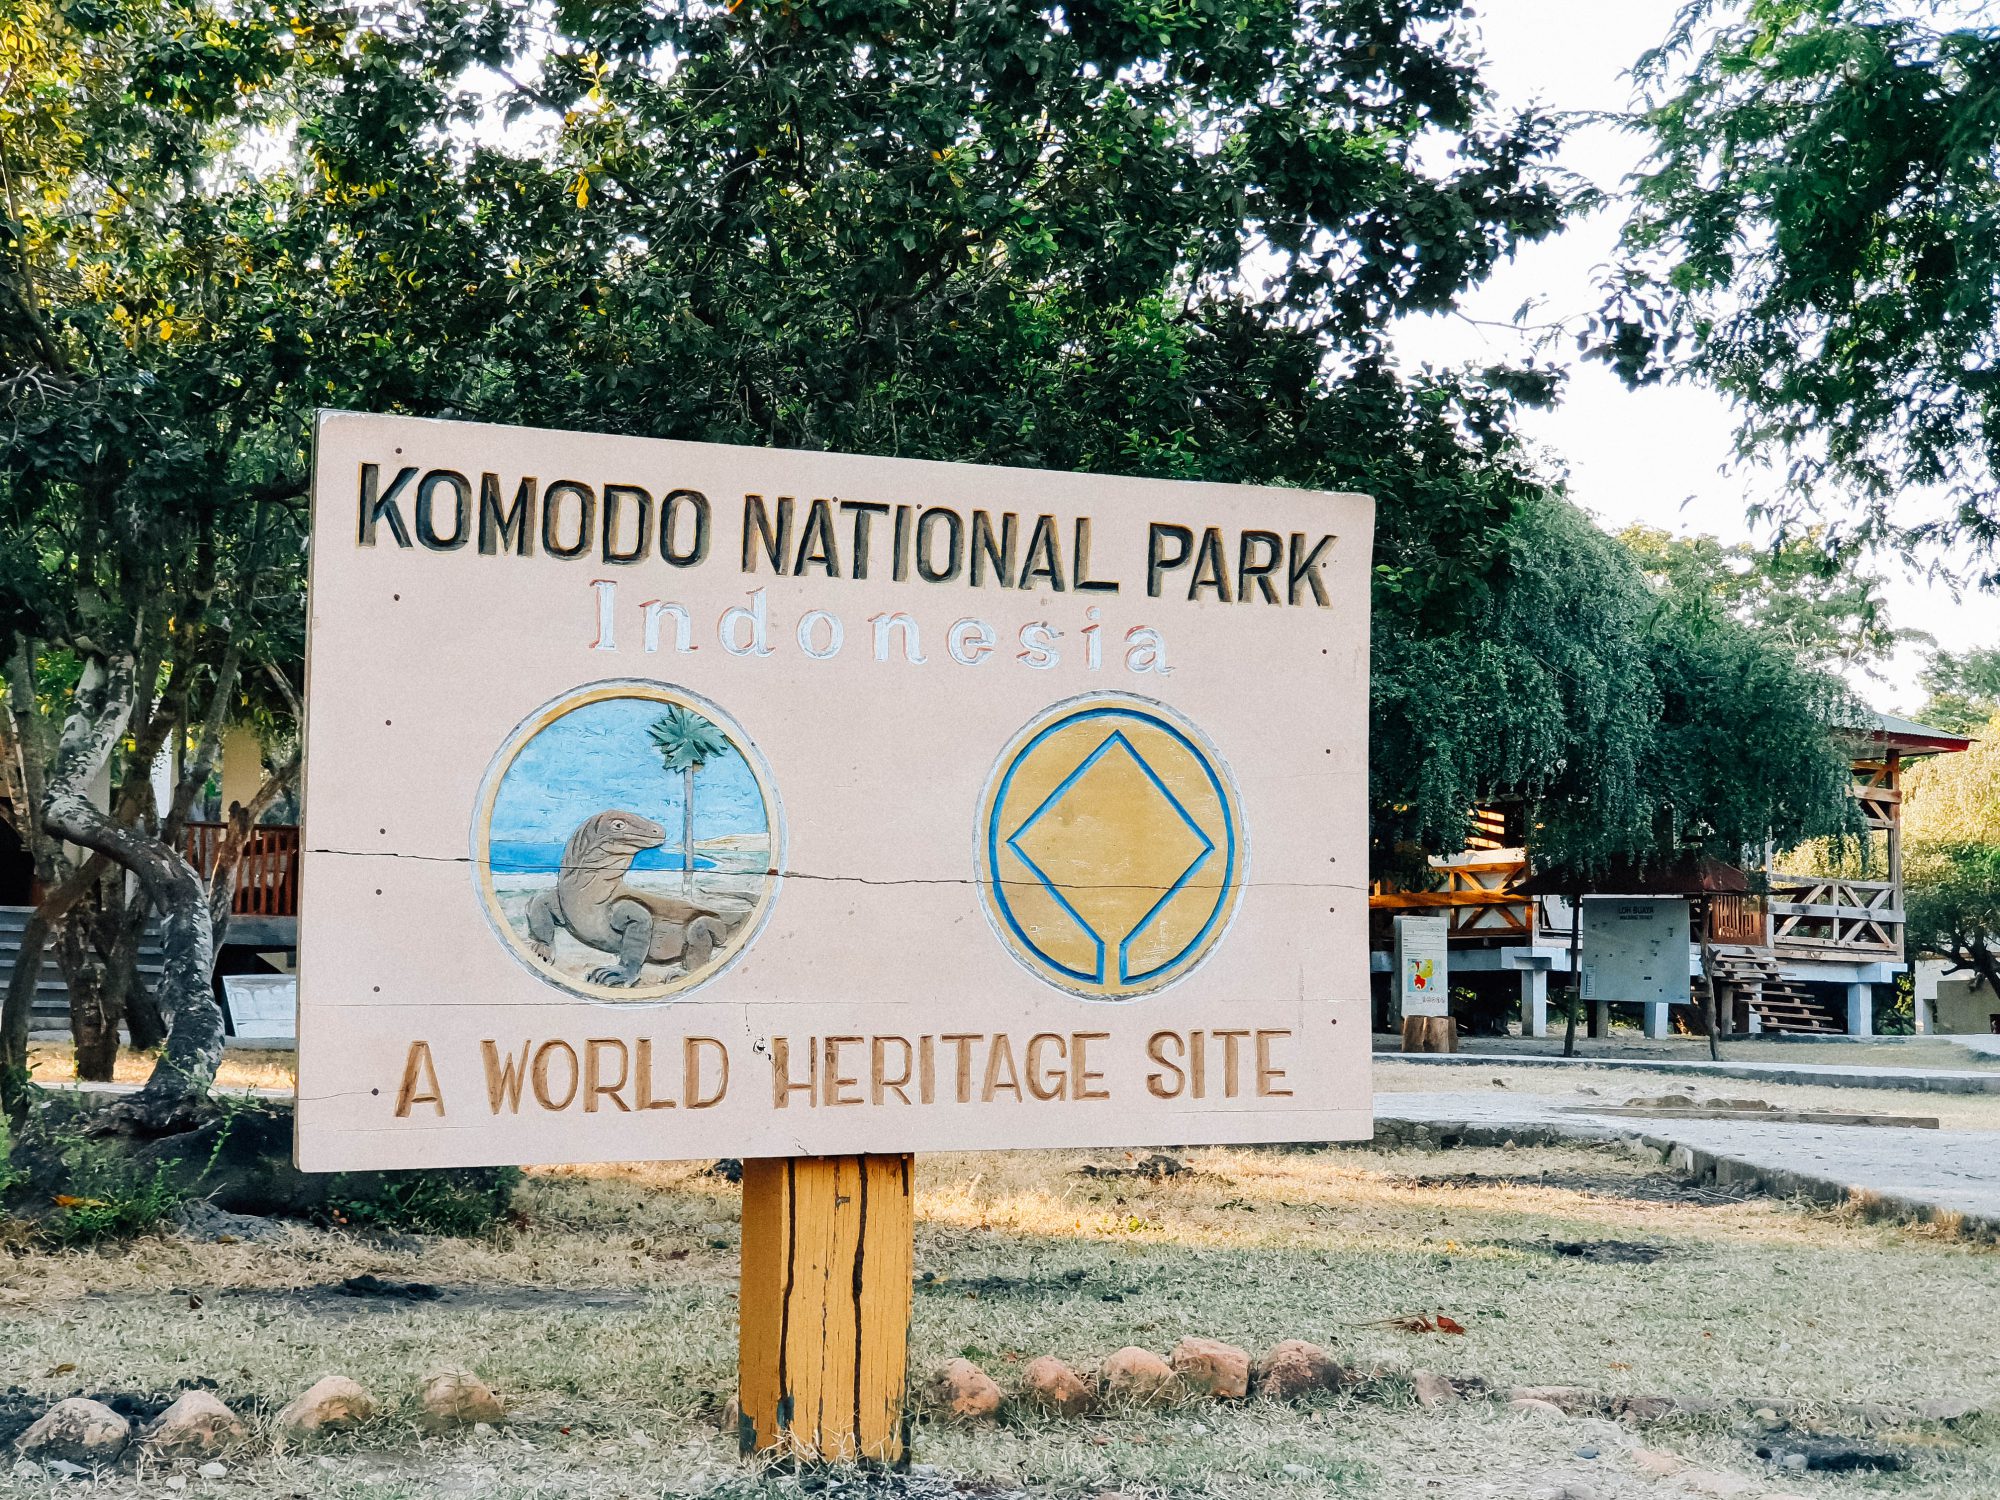 Live in No Land, Komodo &#8211; Flores Island!